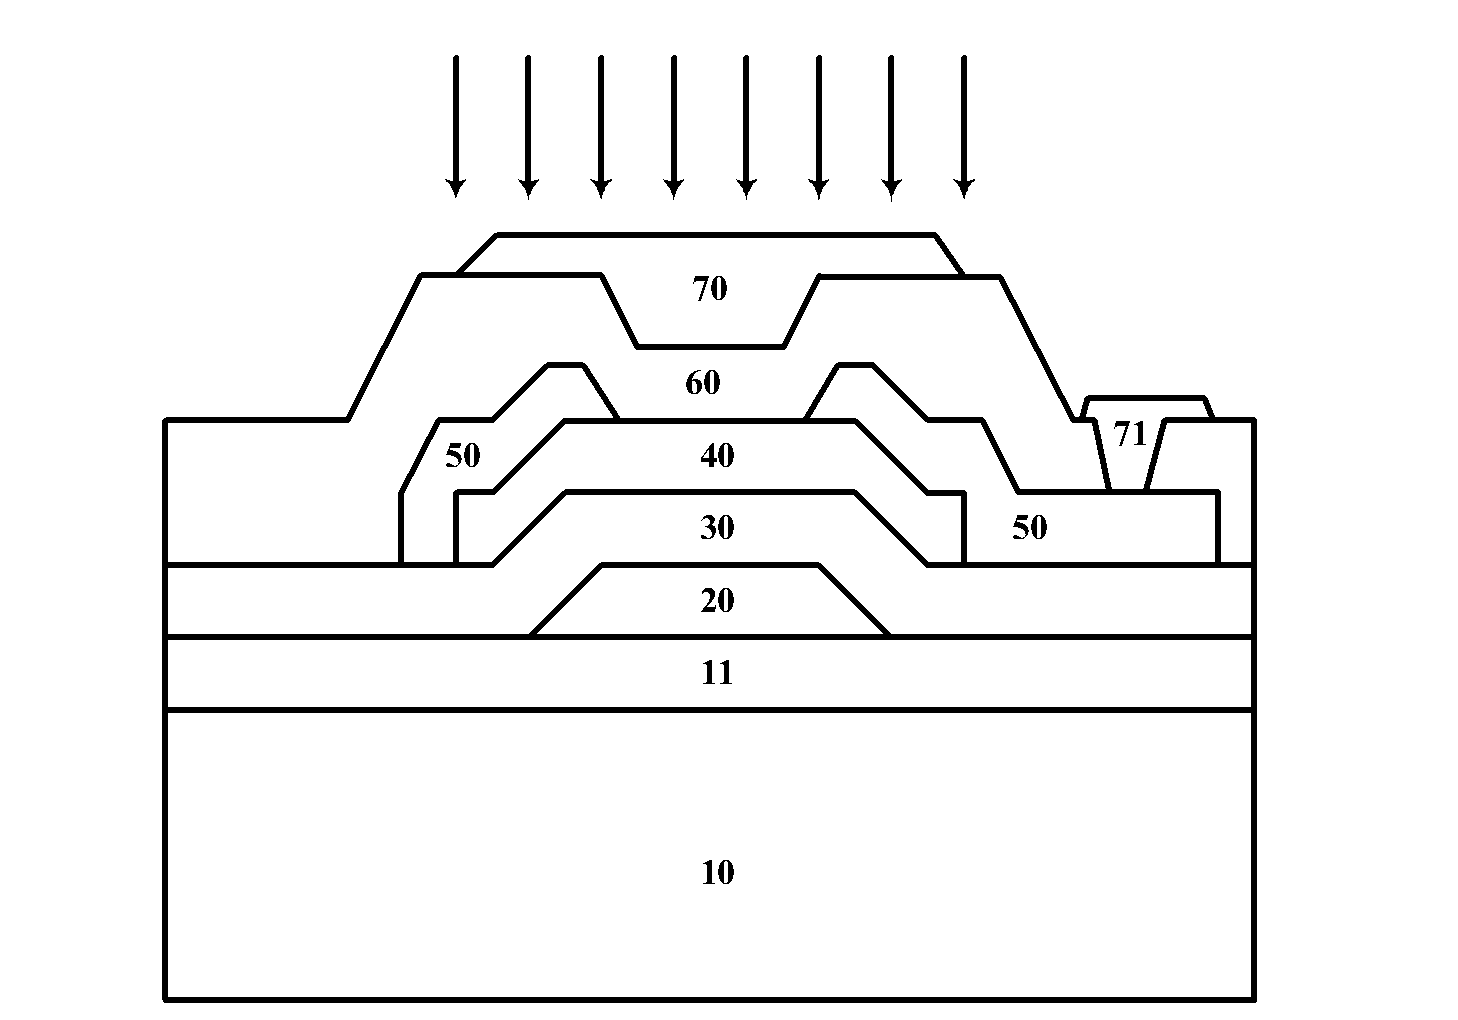 Illumination stability amorphous metallic oxide thin film transistor (TFT) device and display device